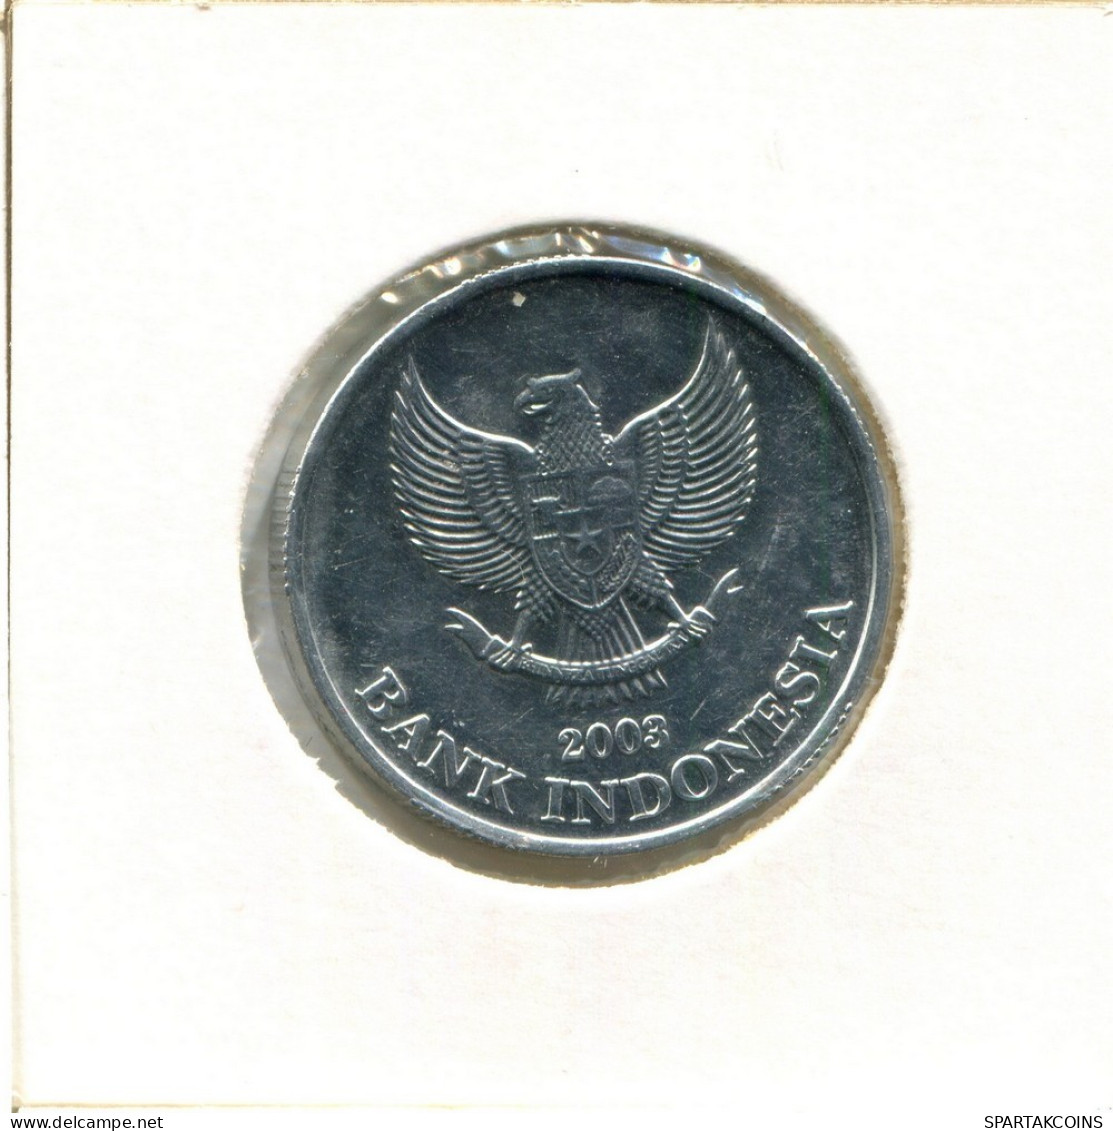 500 RUPIAH 2003 INDONESIA Coin #AY893.U.A - Indonesien